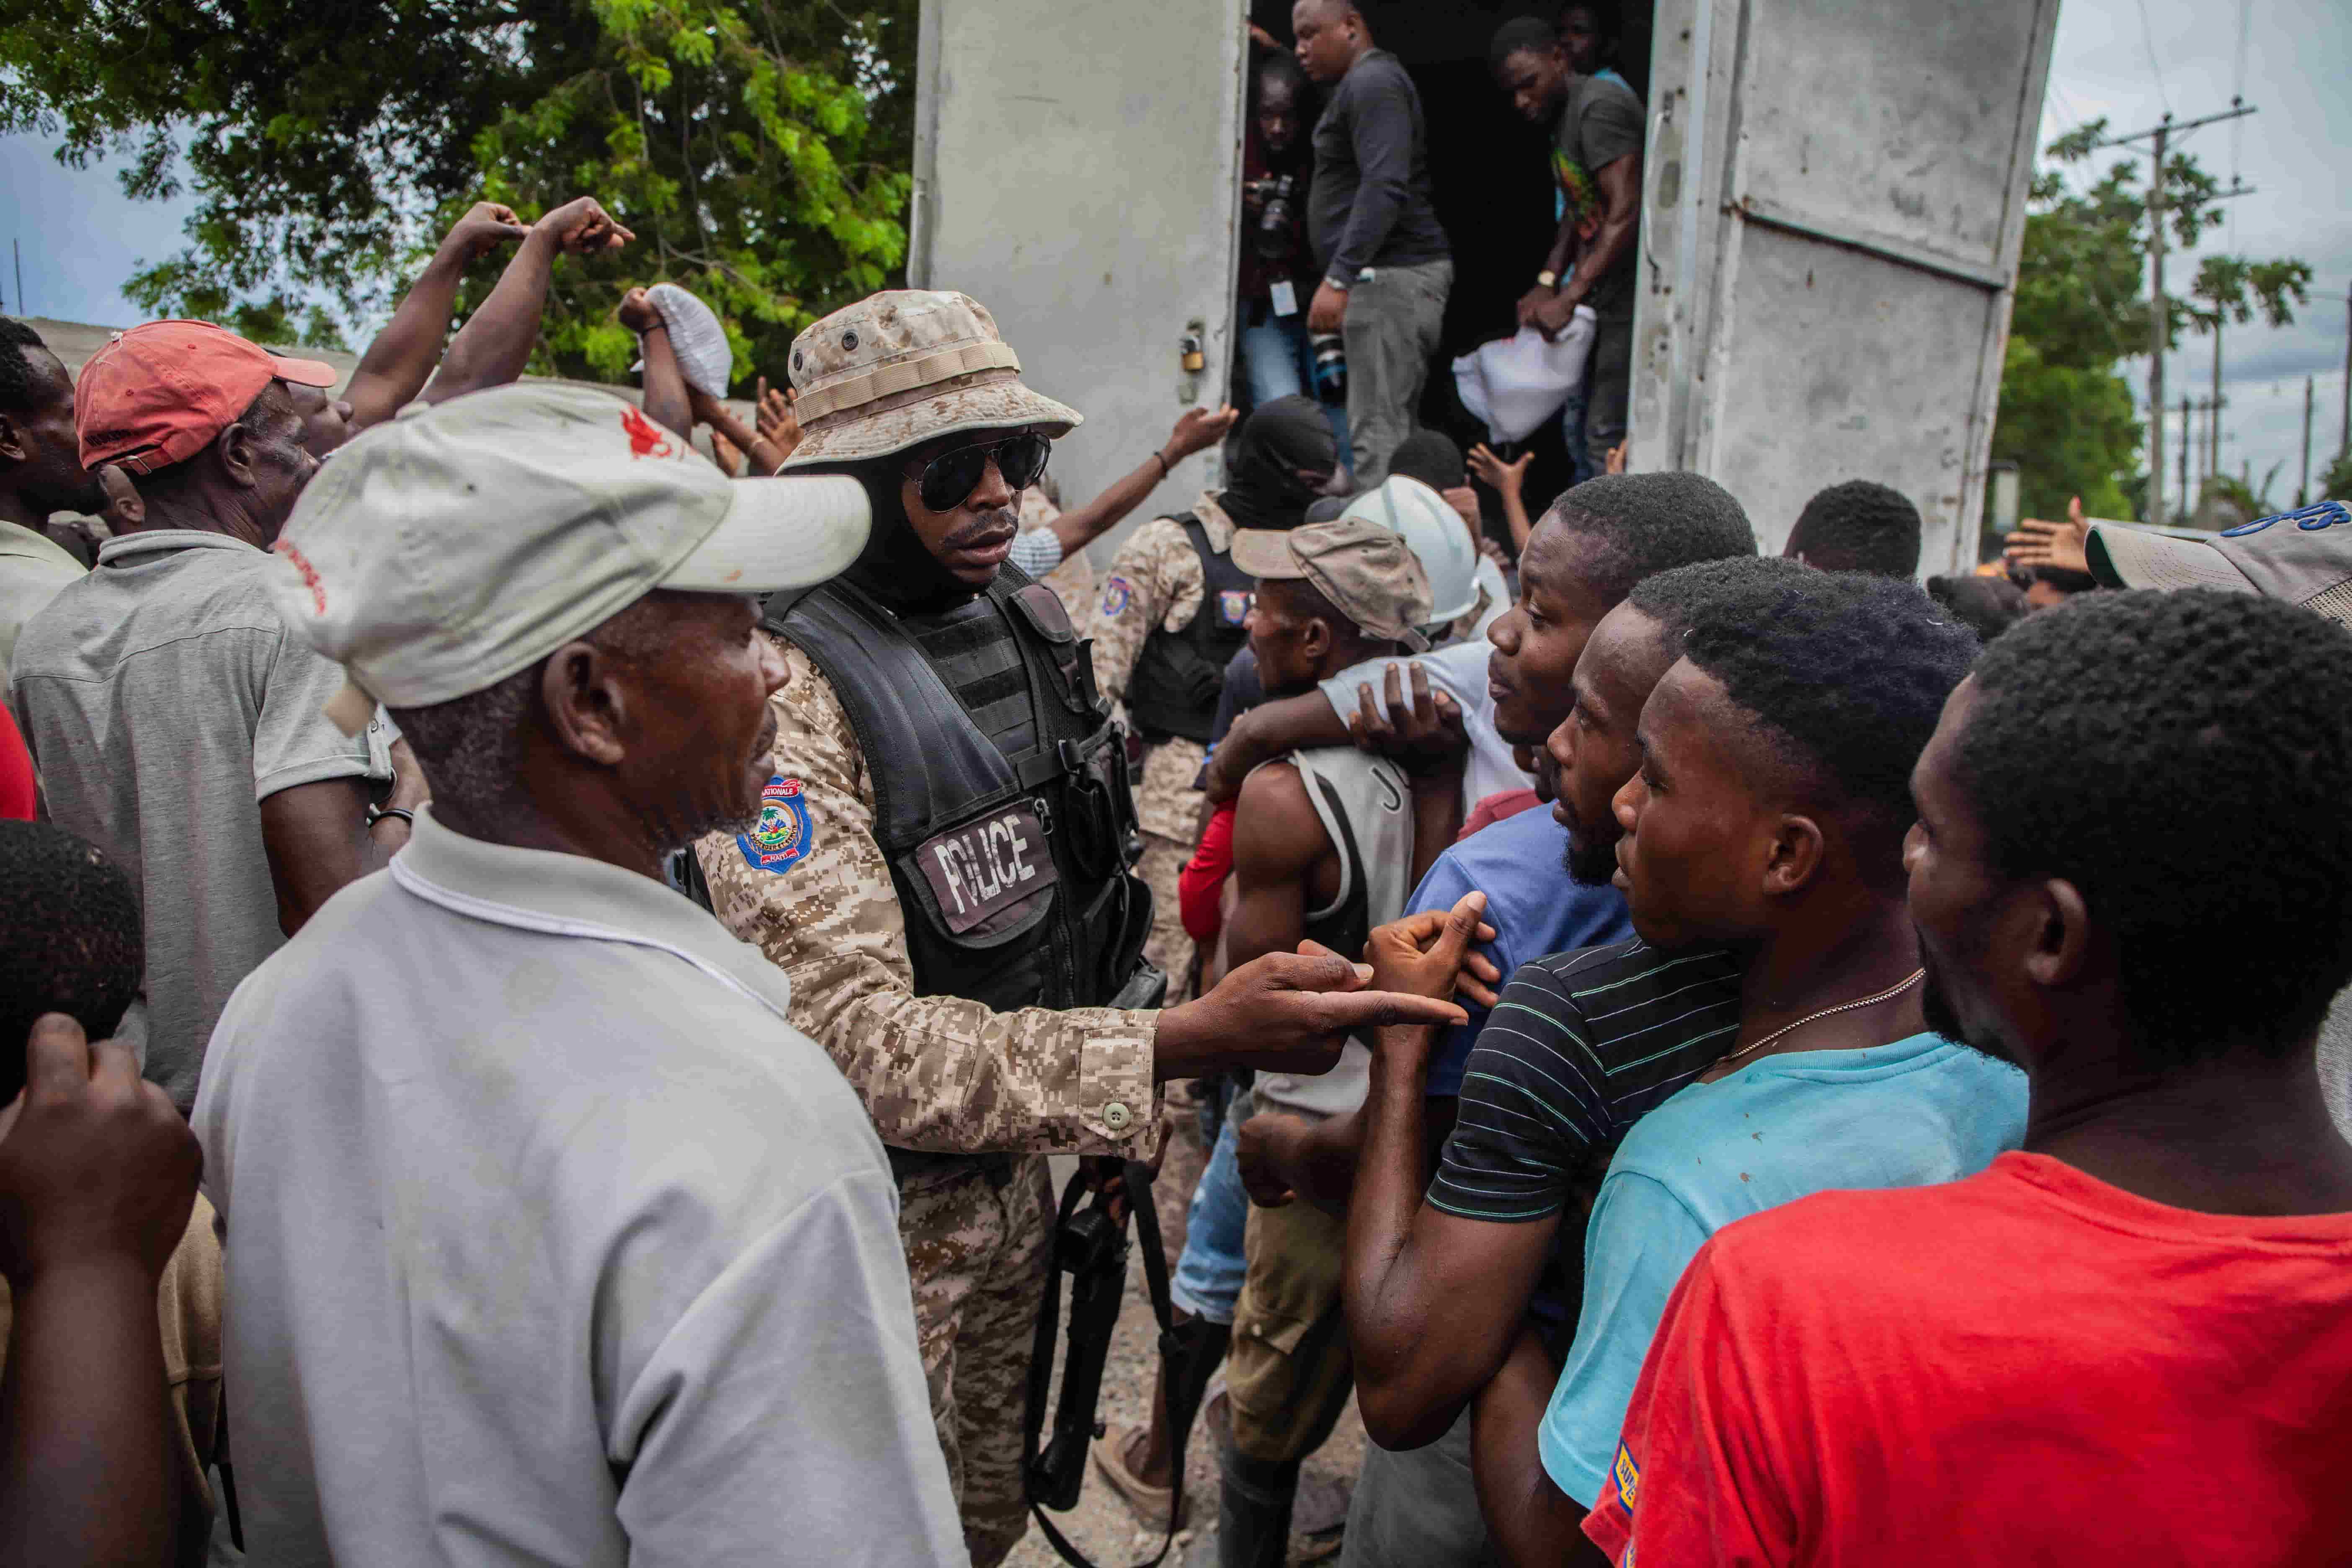 Haiti Declares State of Emergency After Mass Jailbreak